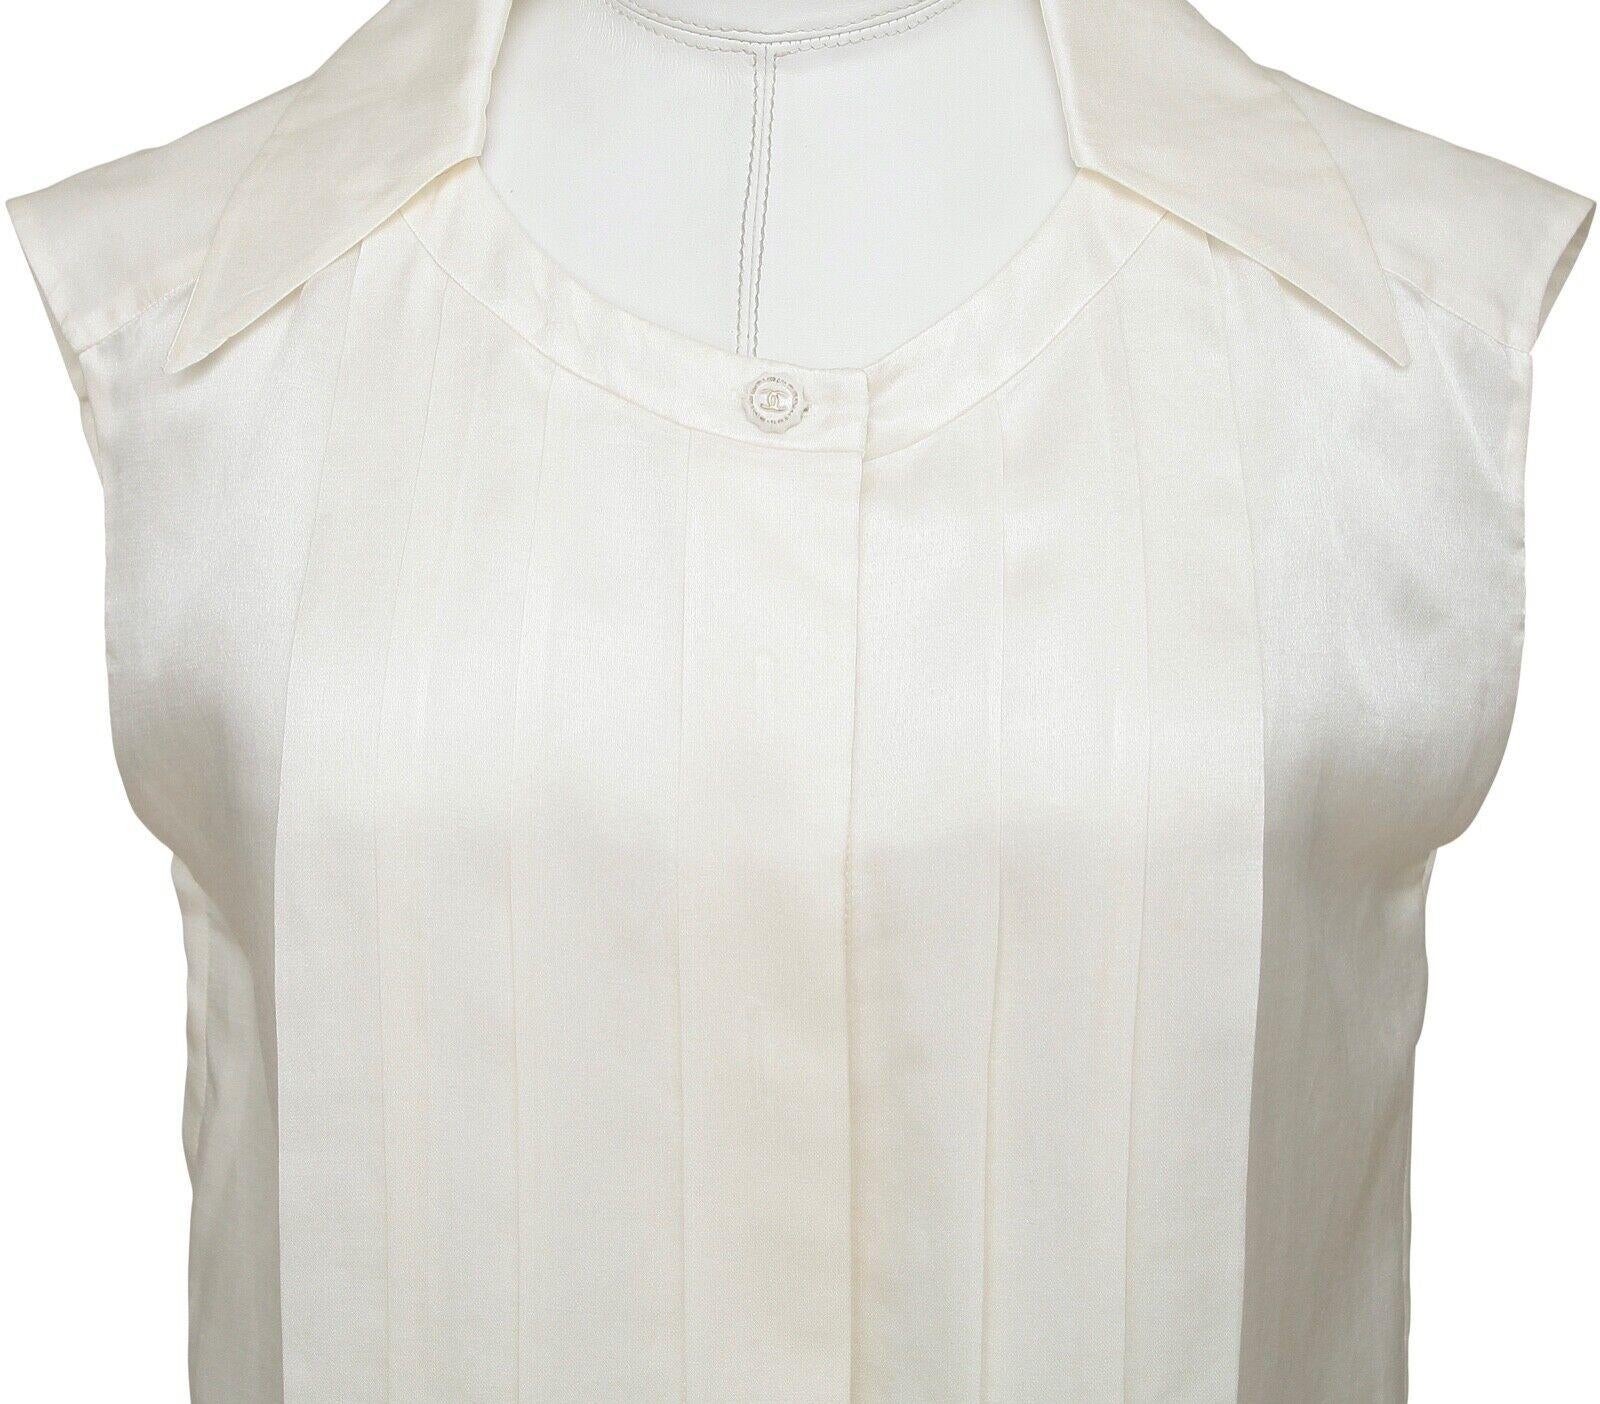 CHANEL Sleeveless Blouse Top Shirt Ivory Ecru Cotton Silk Pleats Collar Sz 44 3